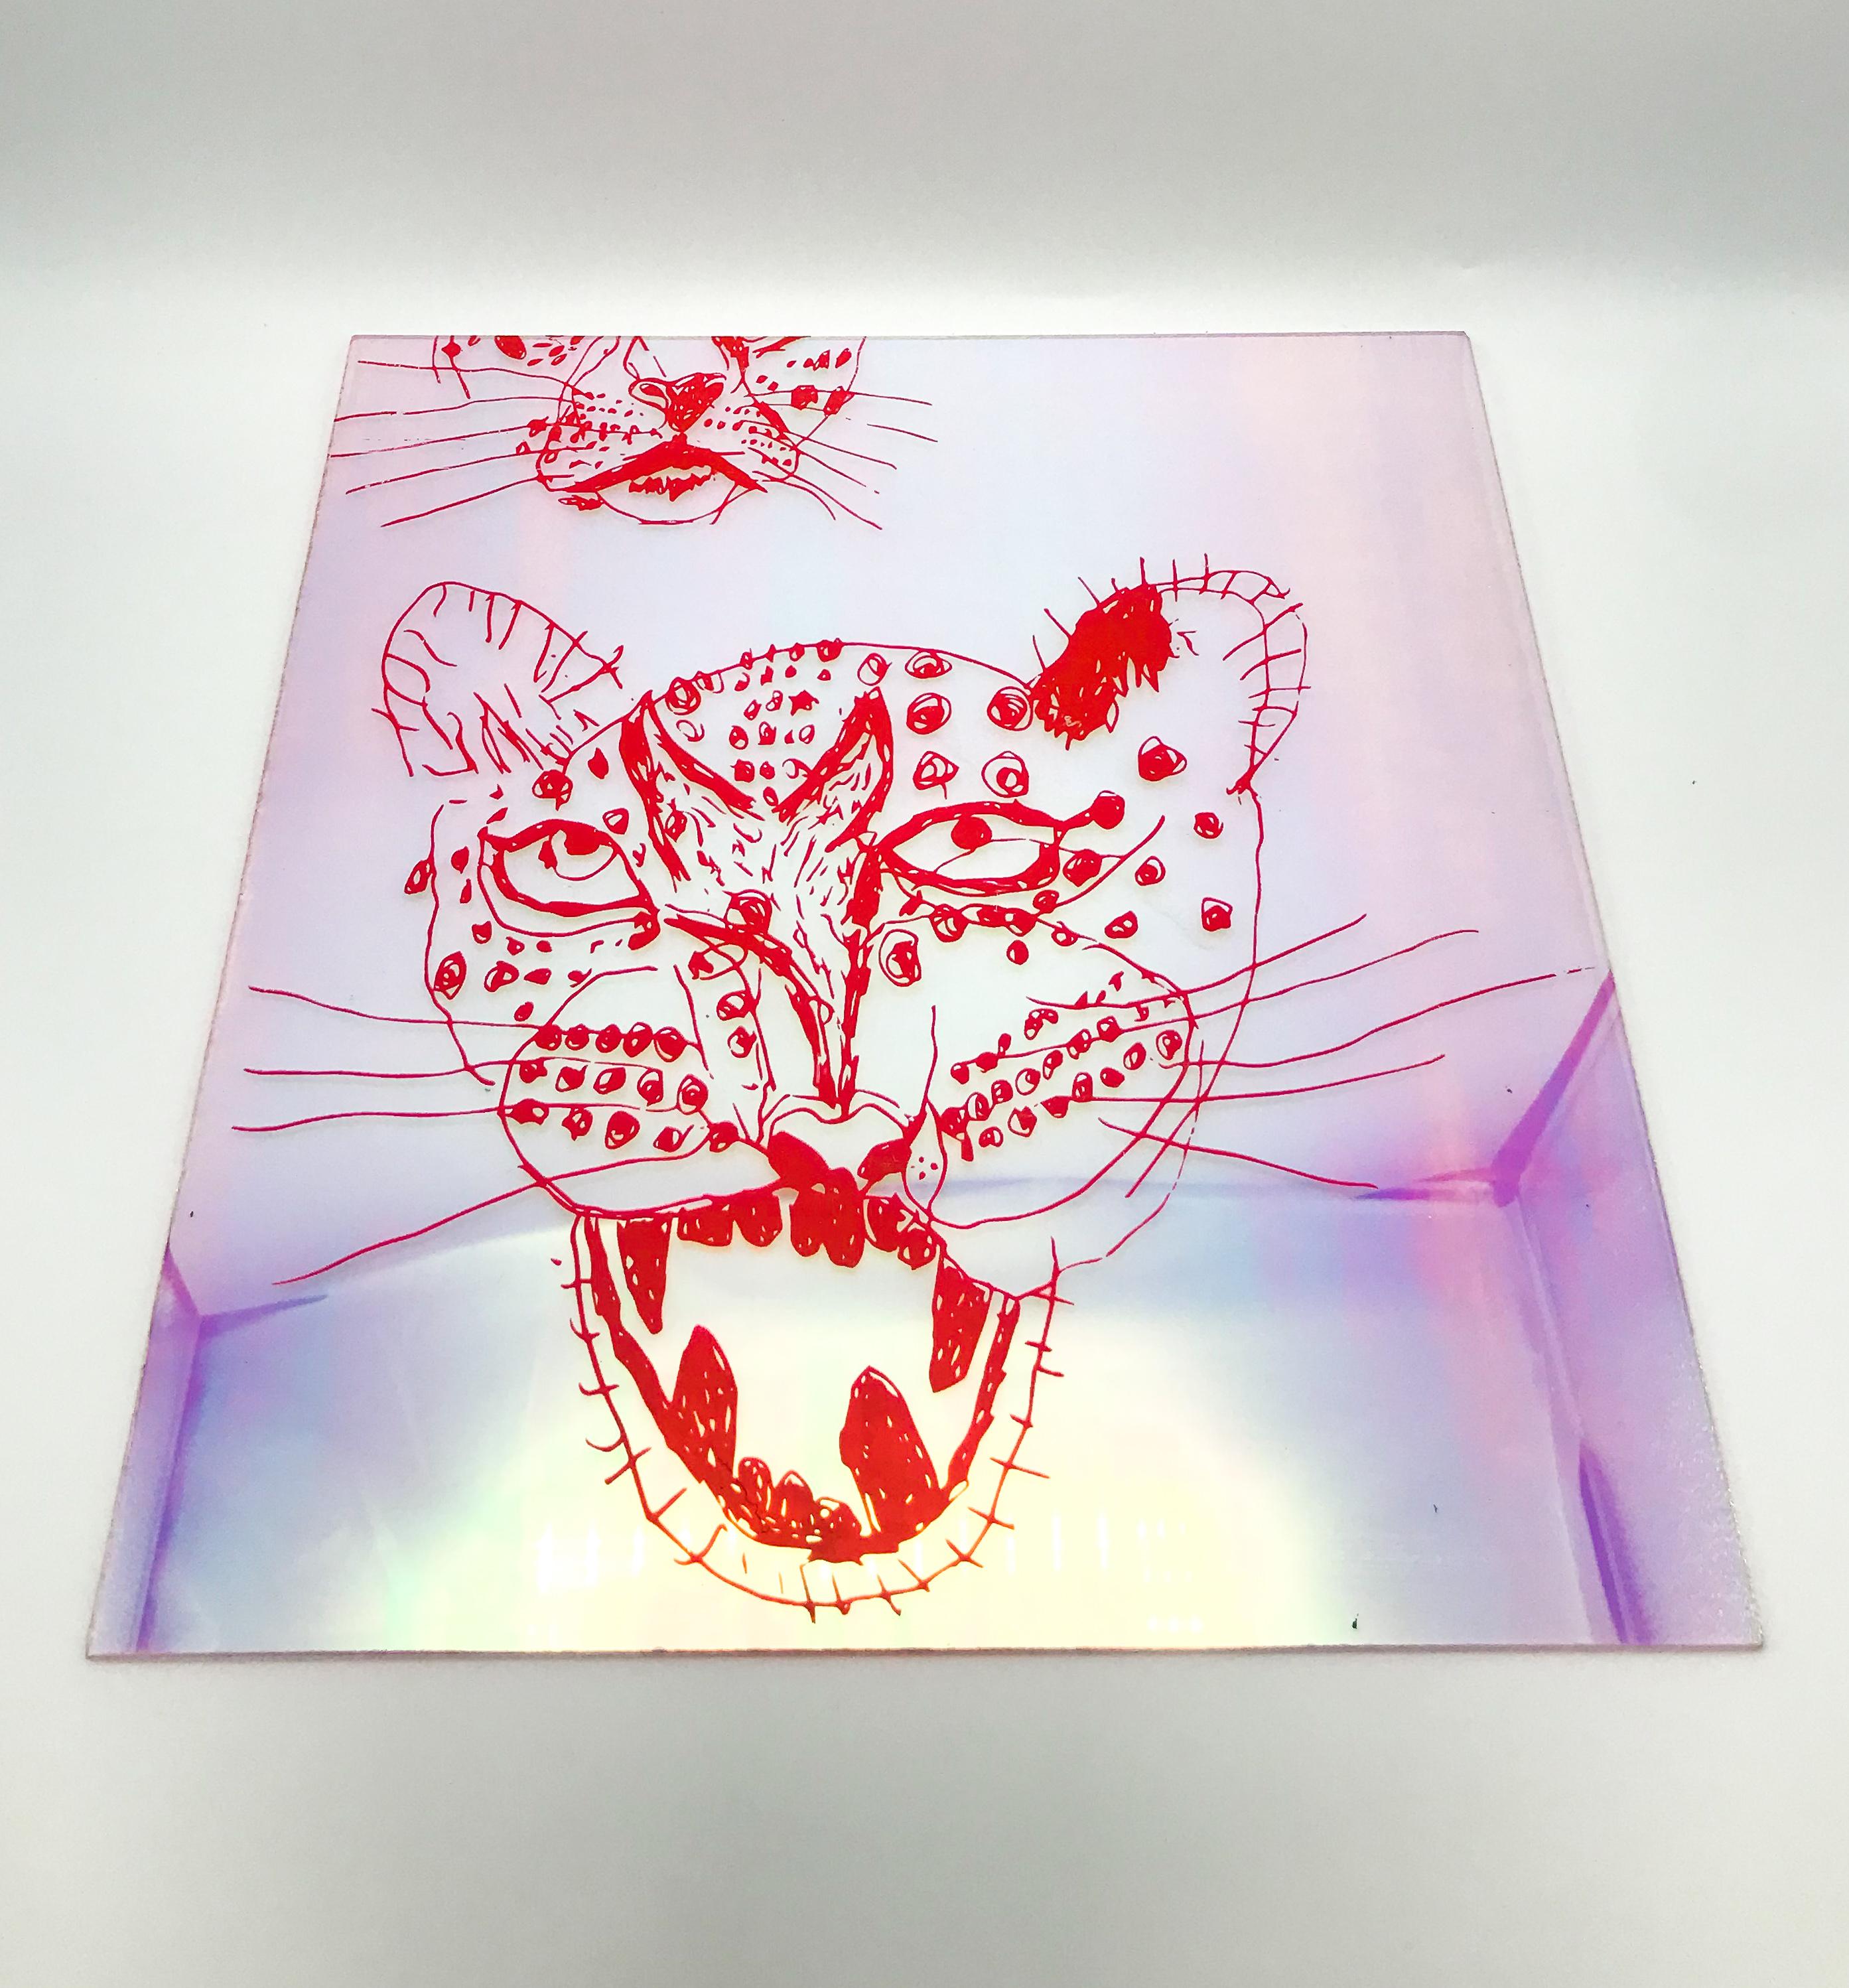 Acrylic Collaboration with Amber Ibarreche, Cheetah Print - Mixed Media Art by Marcus Manganni